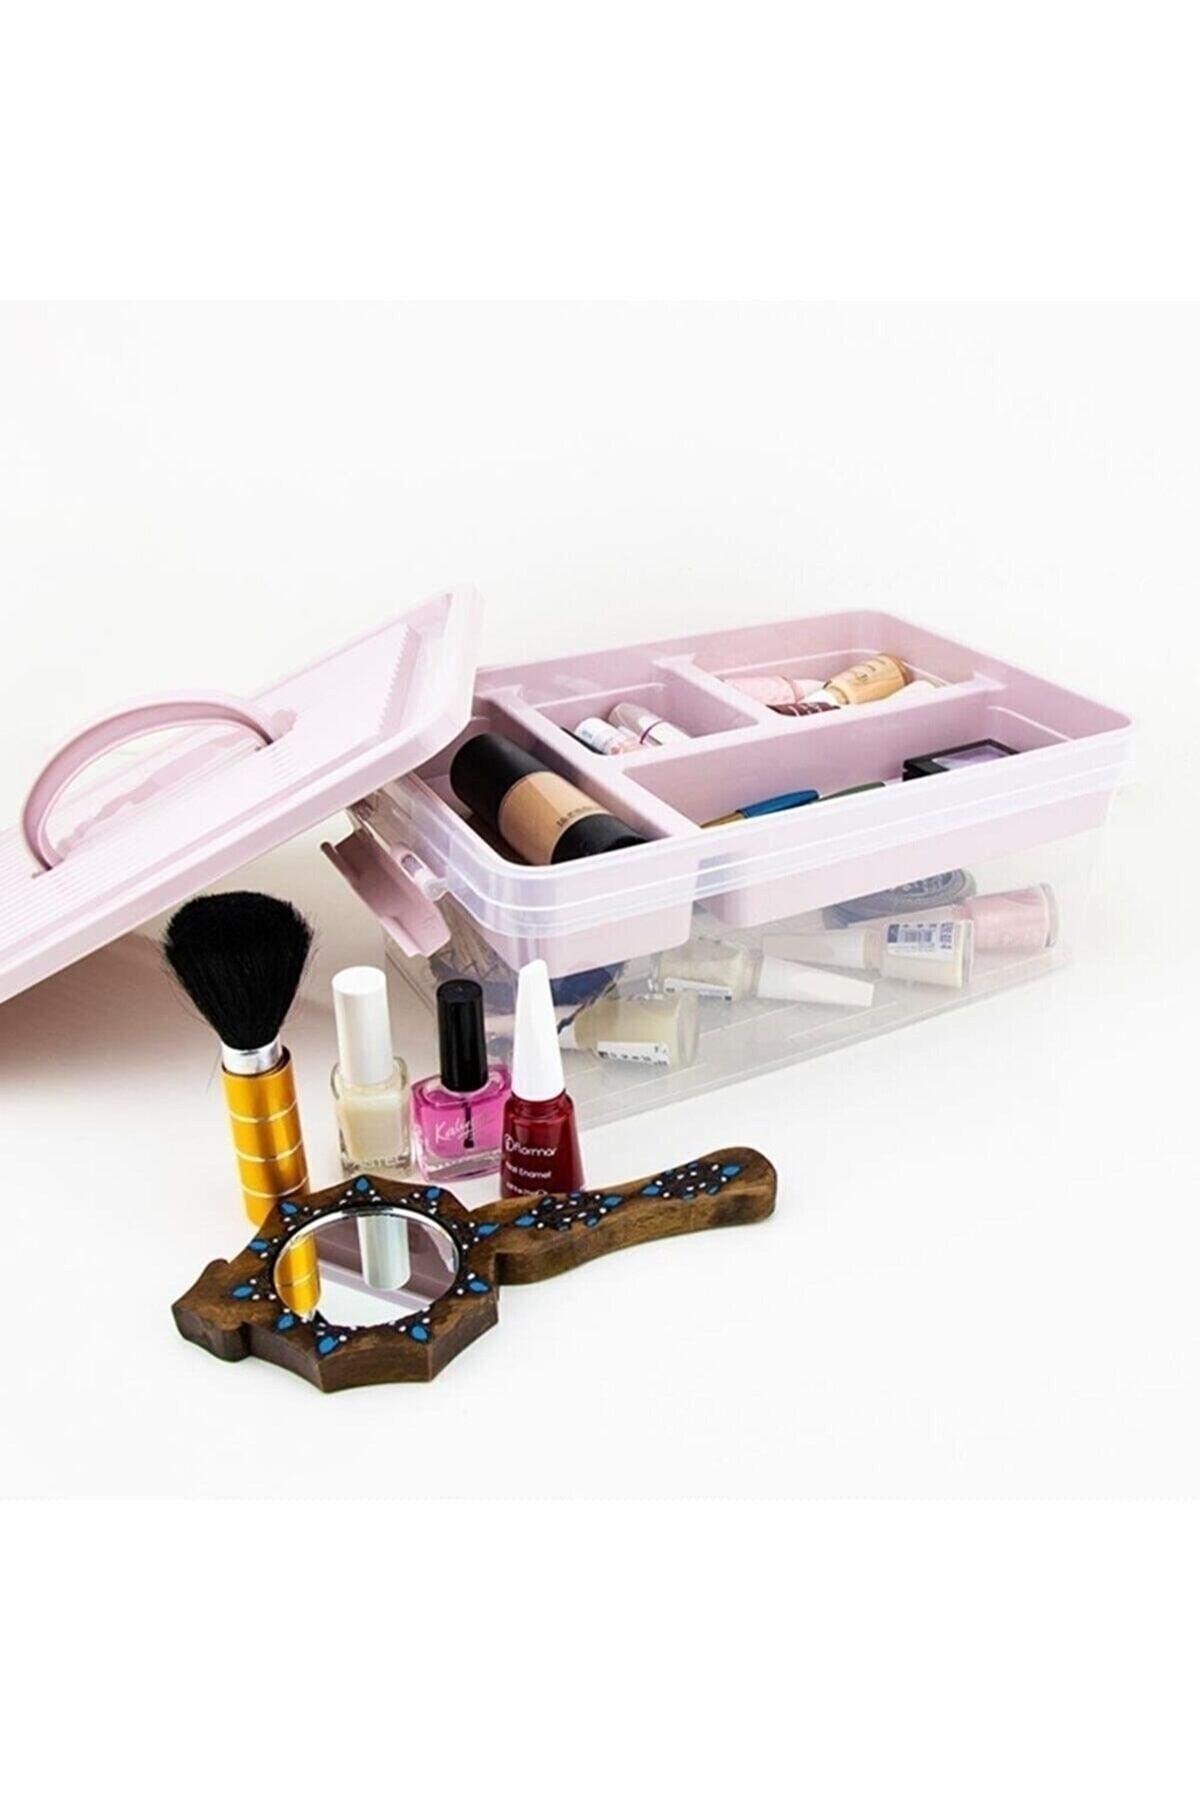 Multi-Purpose Organizer Box Toy, Buckle, Medicine, Small Goods Collection Bag Pink - Swordslife